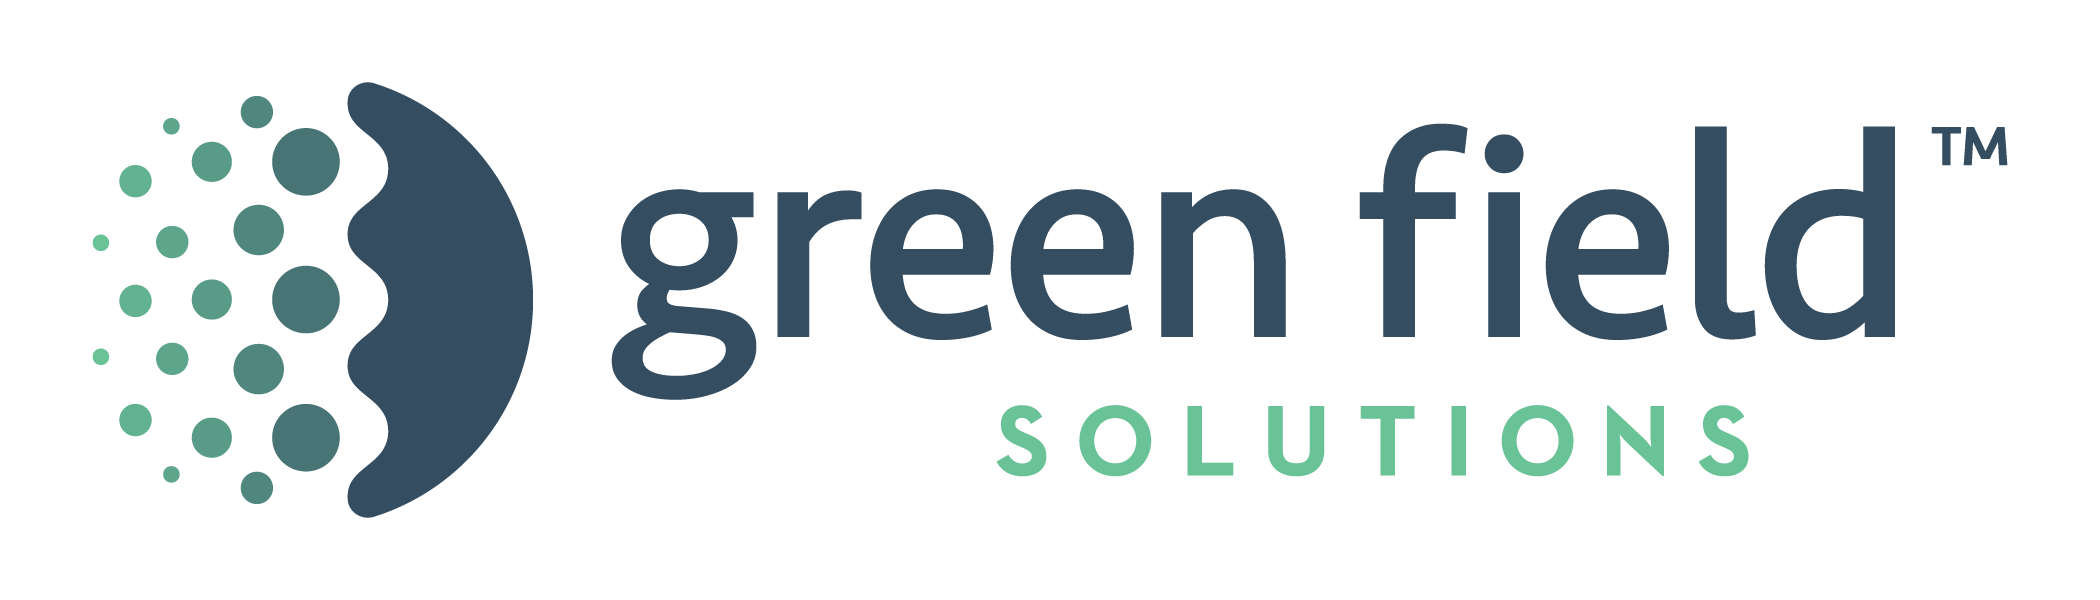 Green field solutions